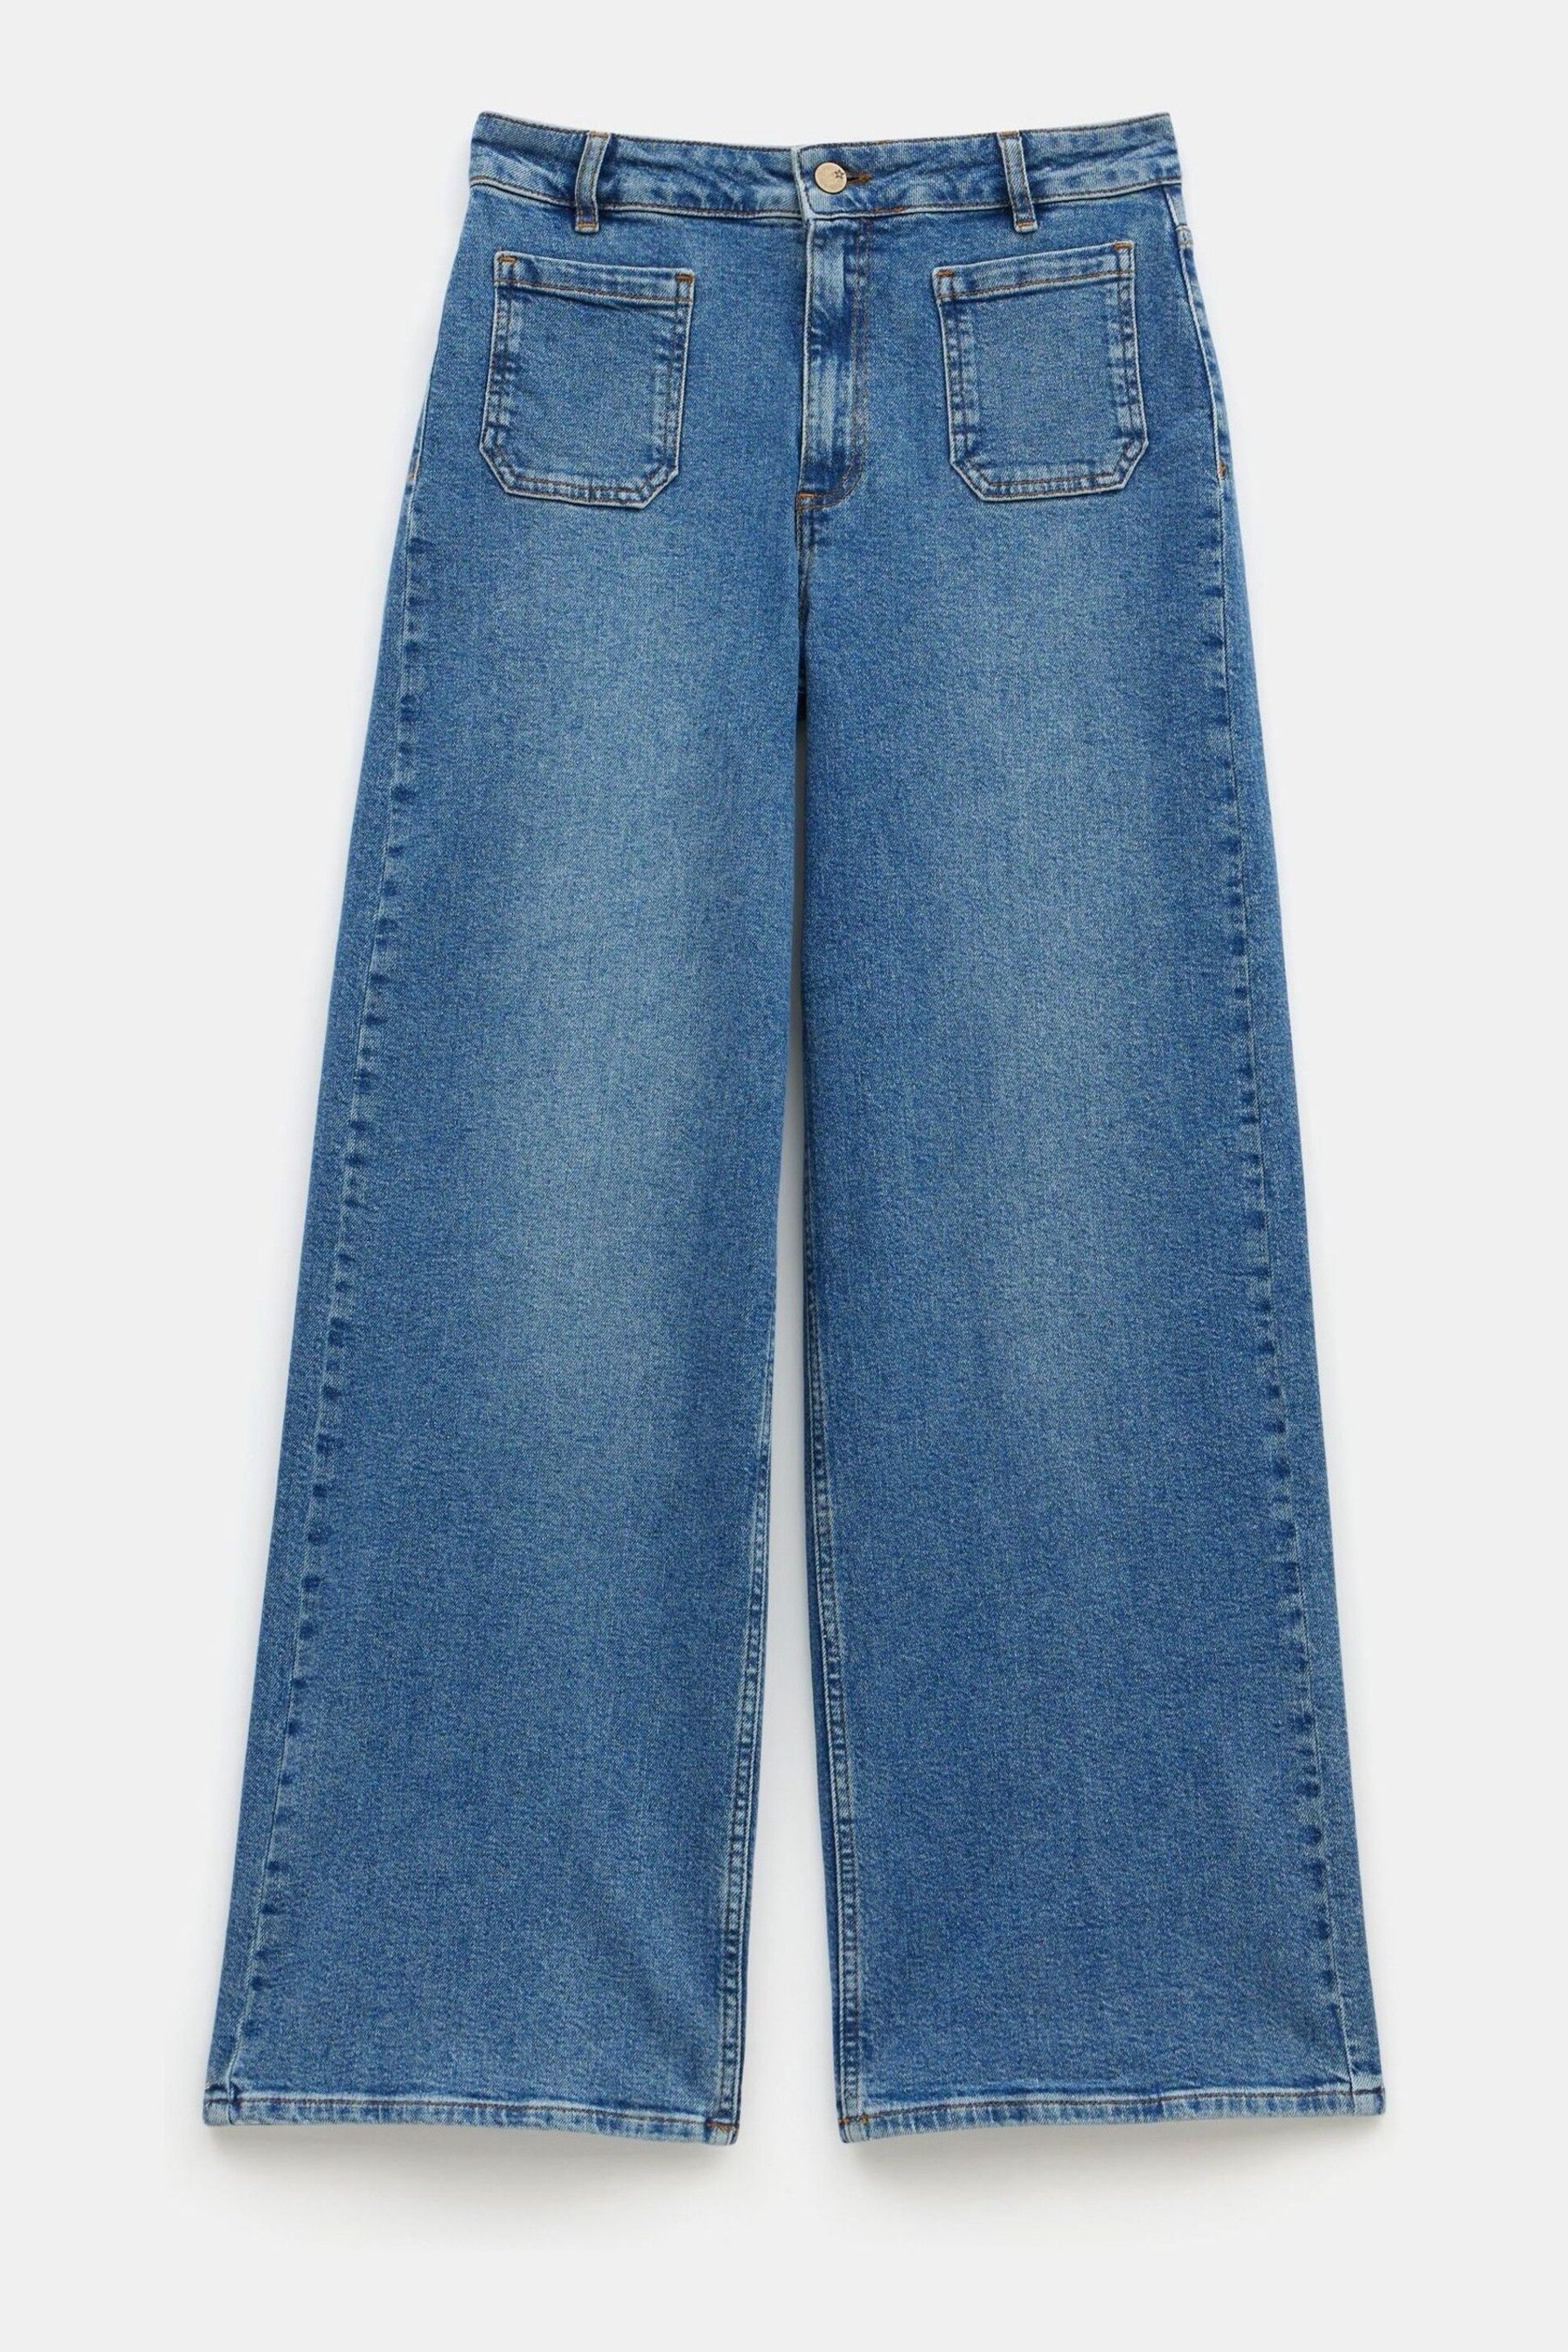 Hush Blue Rowan Flared Jeans - Image 5 of 5